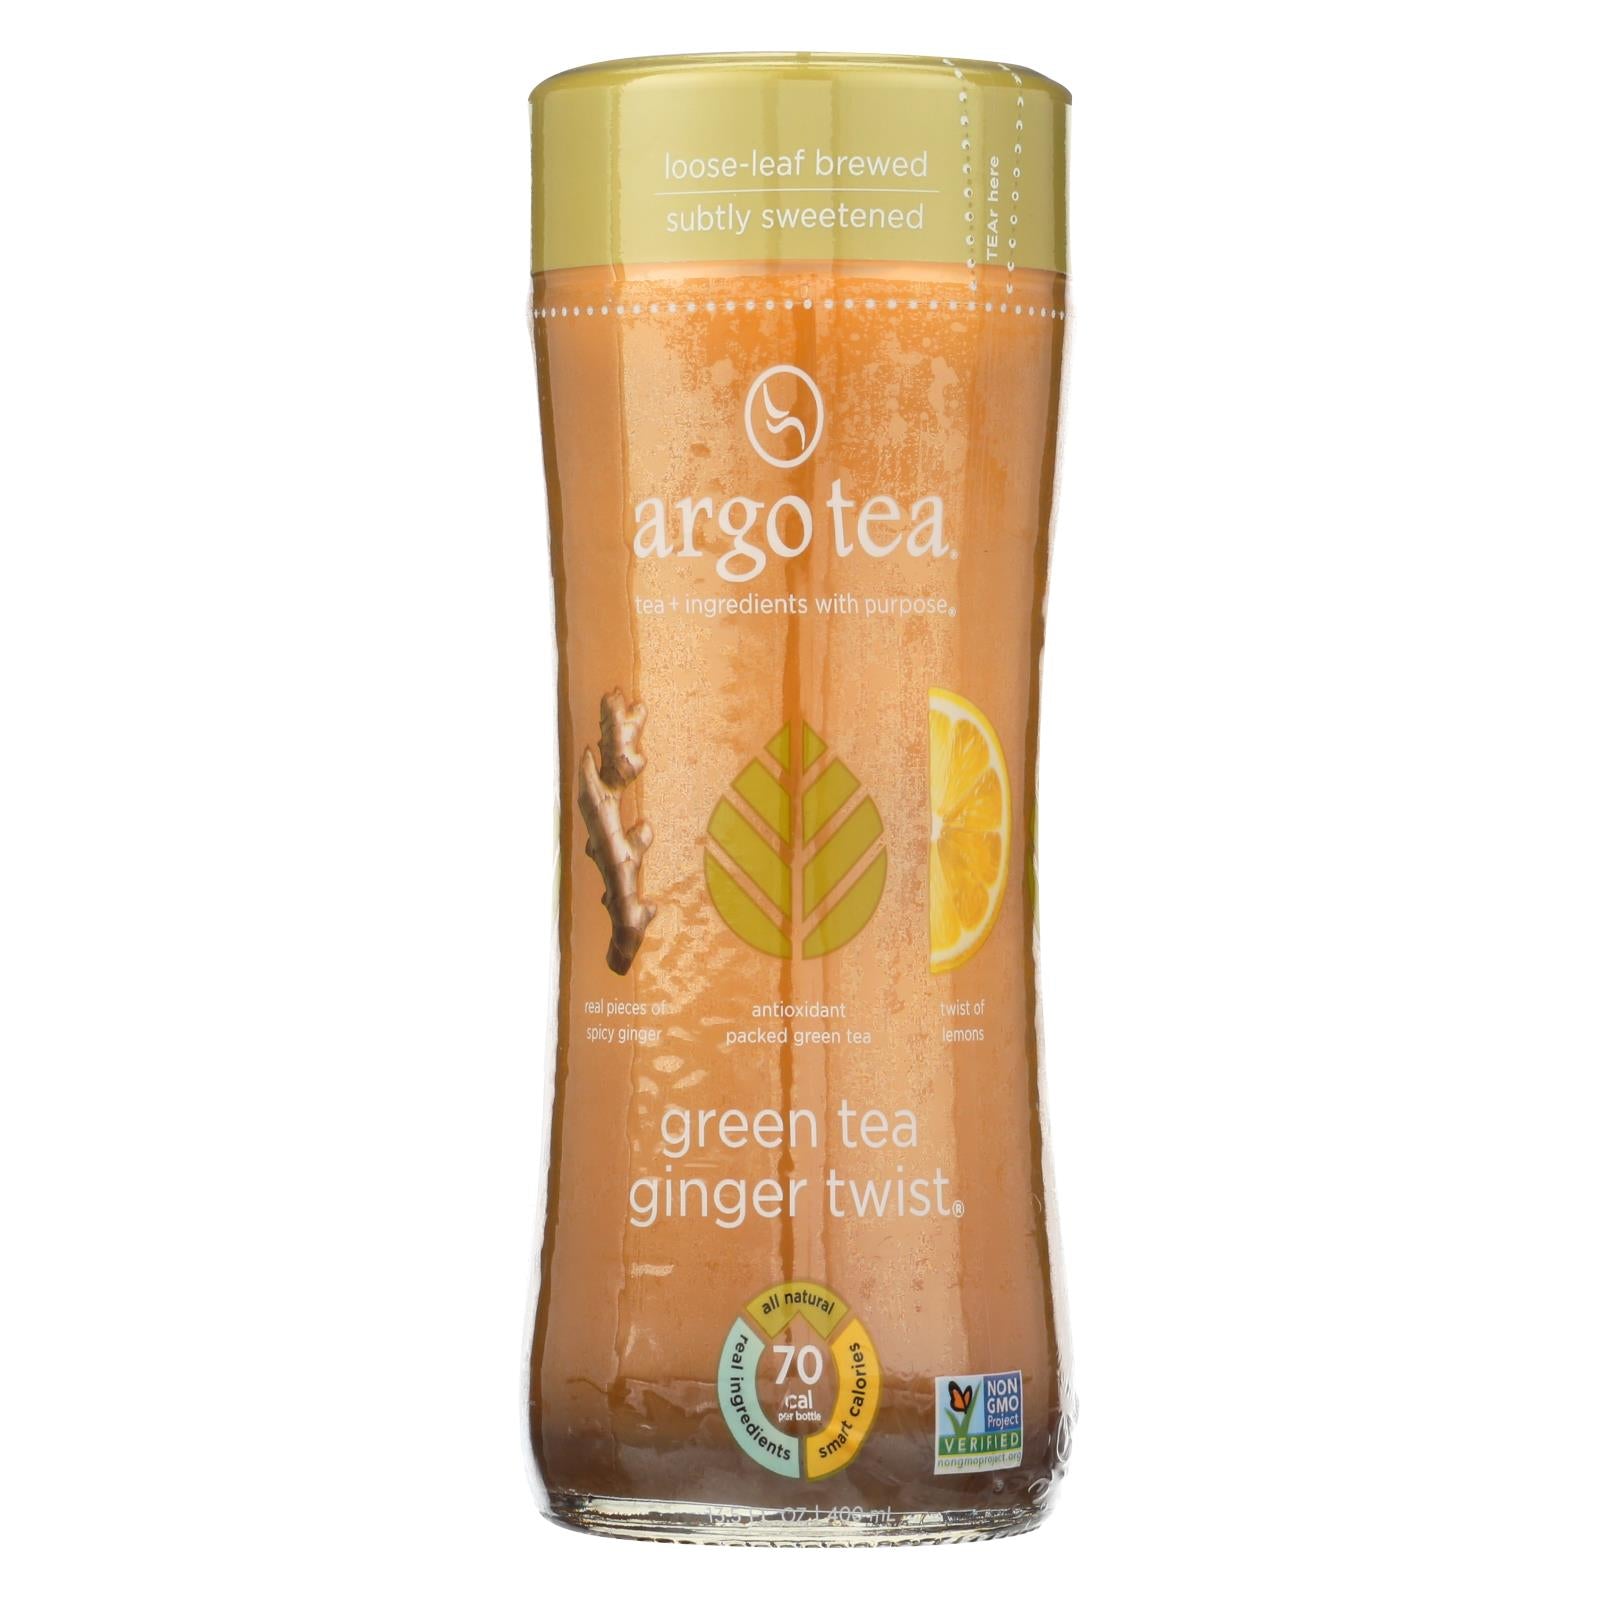 Argo Tea, Argo Tea Iced Green Tea - Ginger Twist - Case of 12 - 13.5 Fl oz. (Pack of 12)